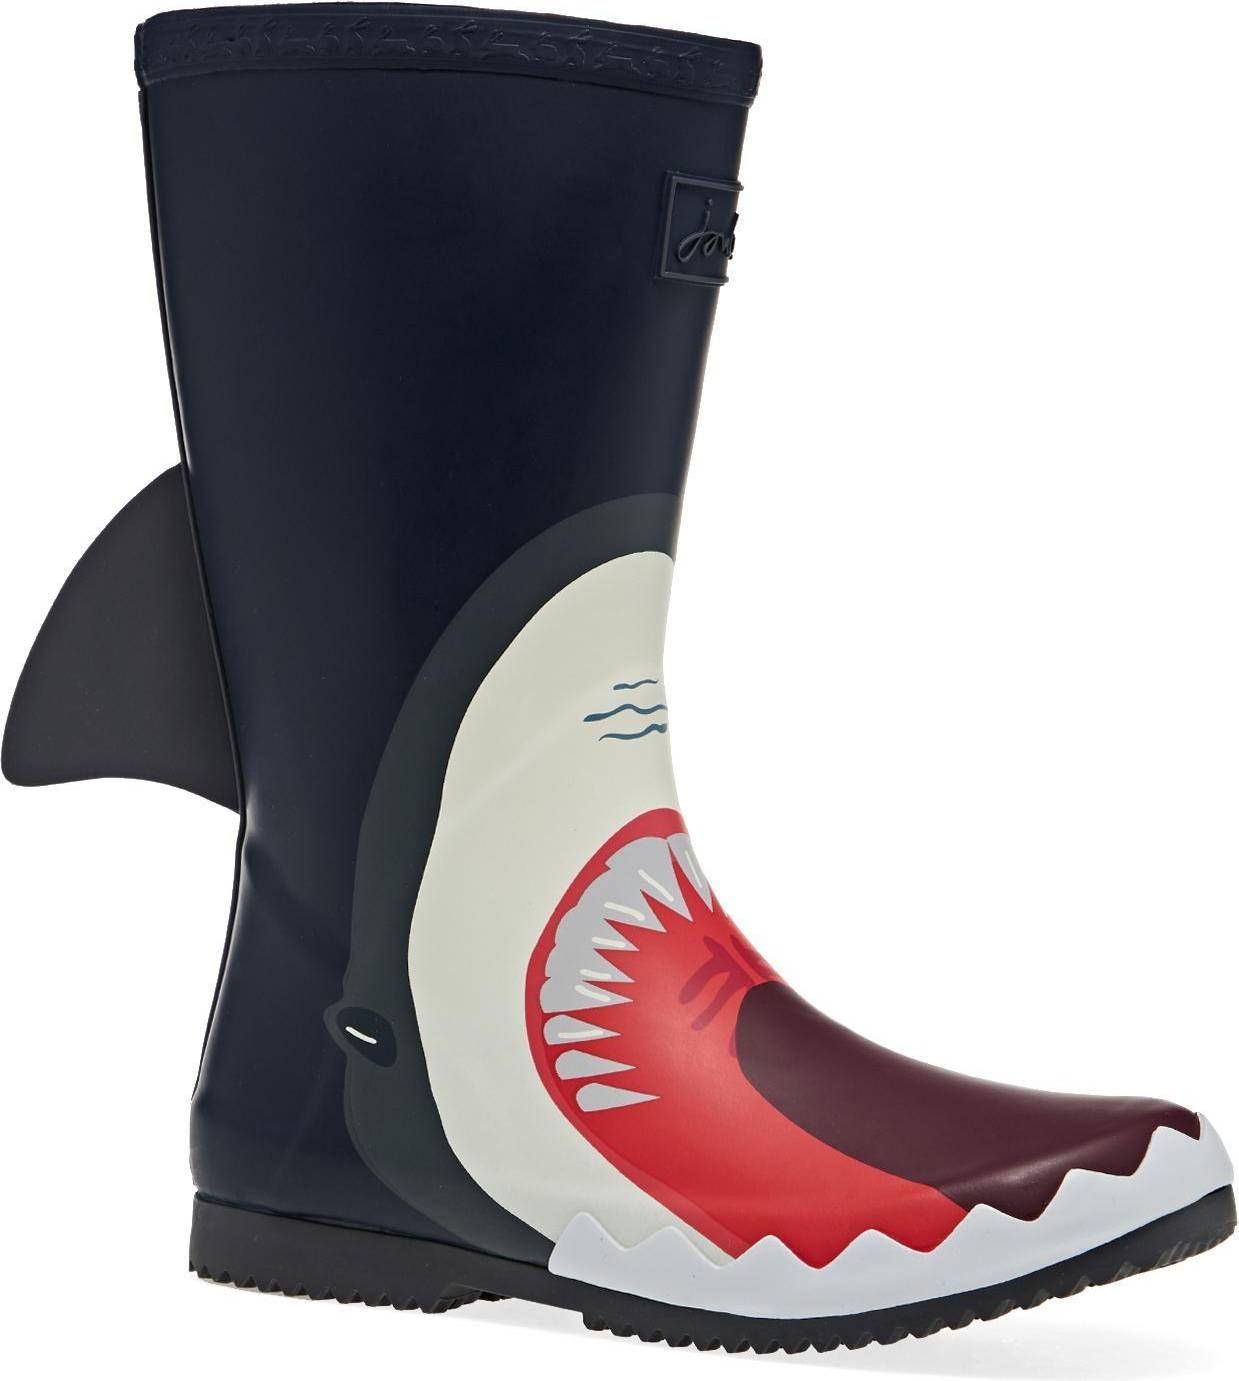  Bild på Joules Roll Up Flexible Printed Wellies - Navy Shark gummistövlar